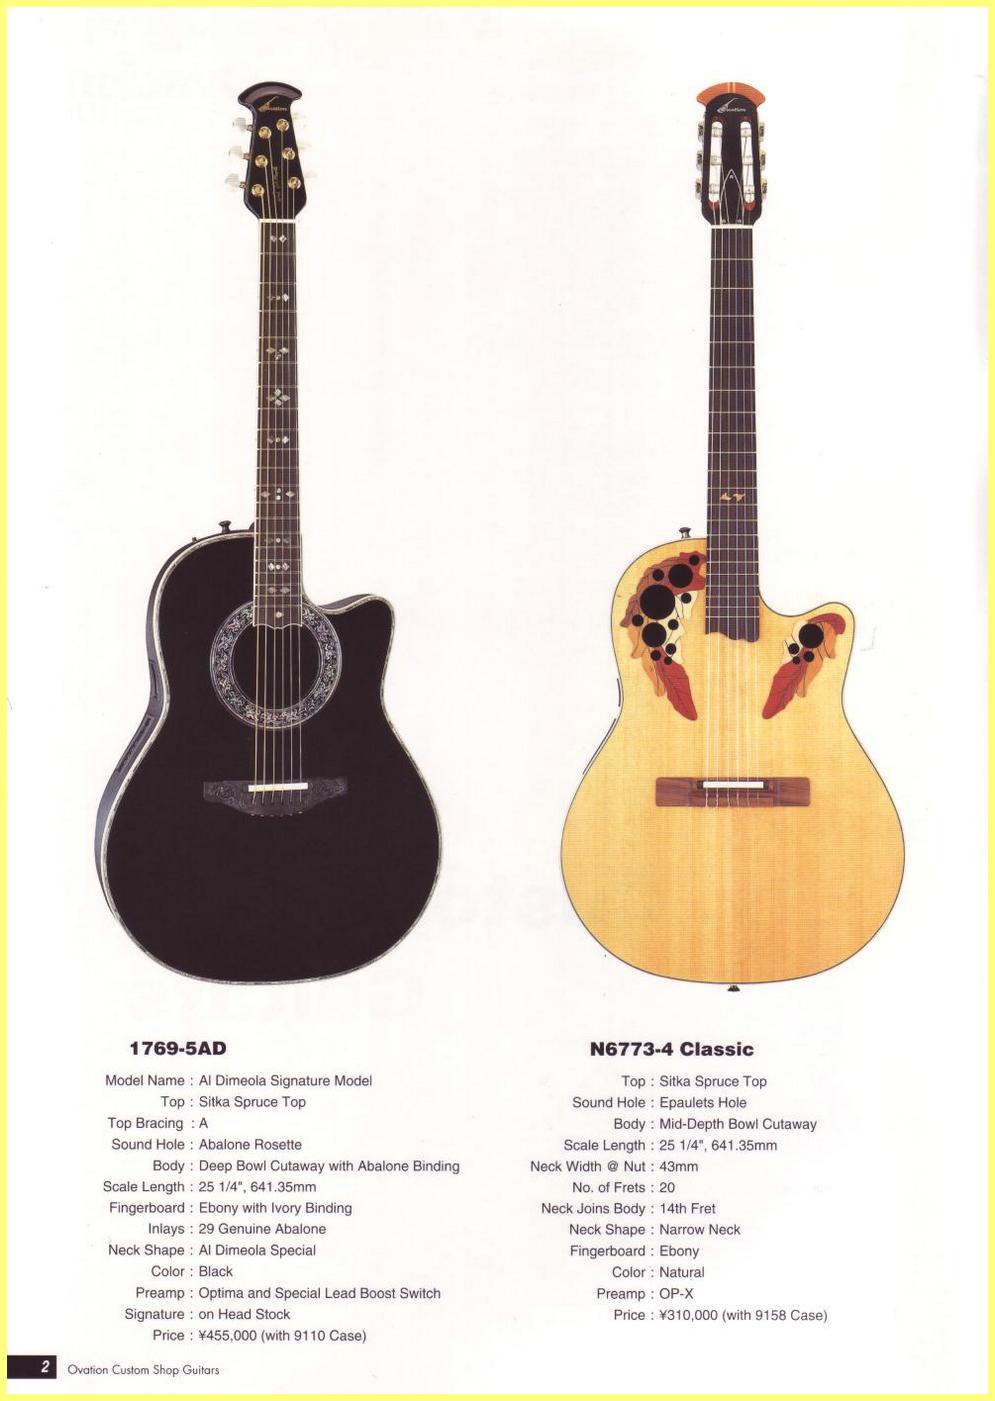 Ovation Custom Shop Guitars Japanese Catalog